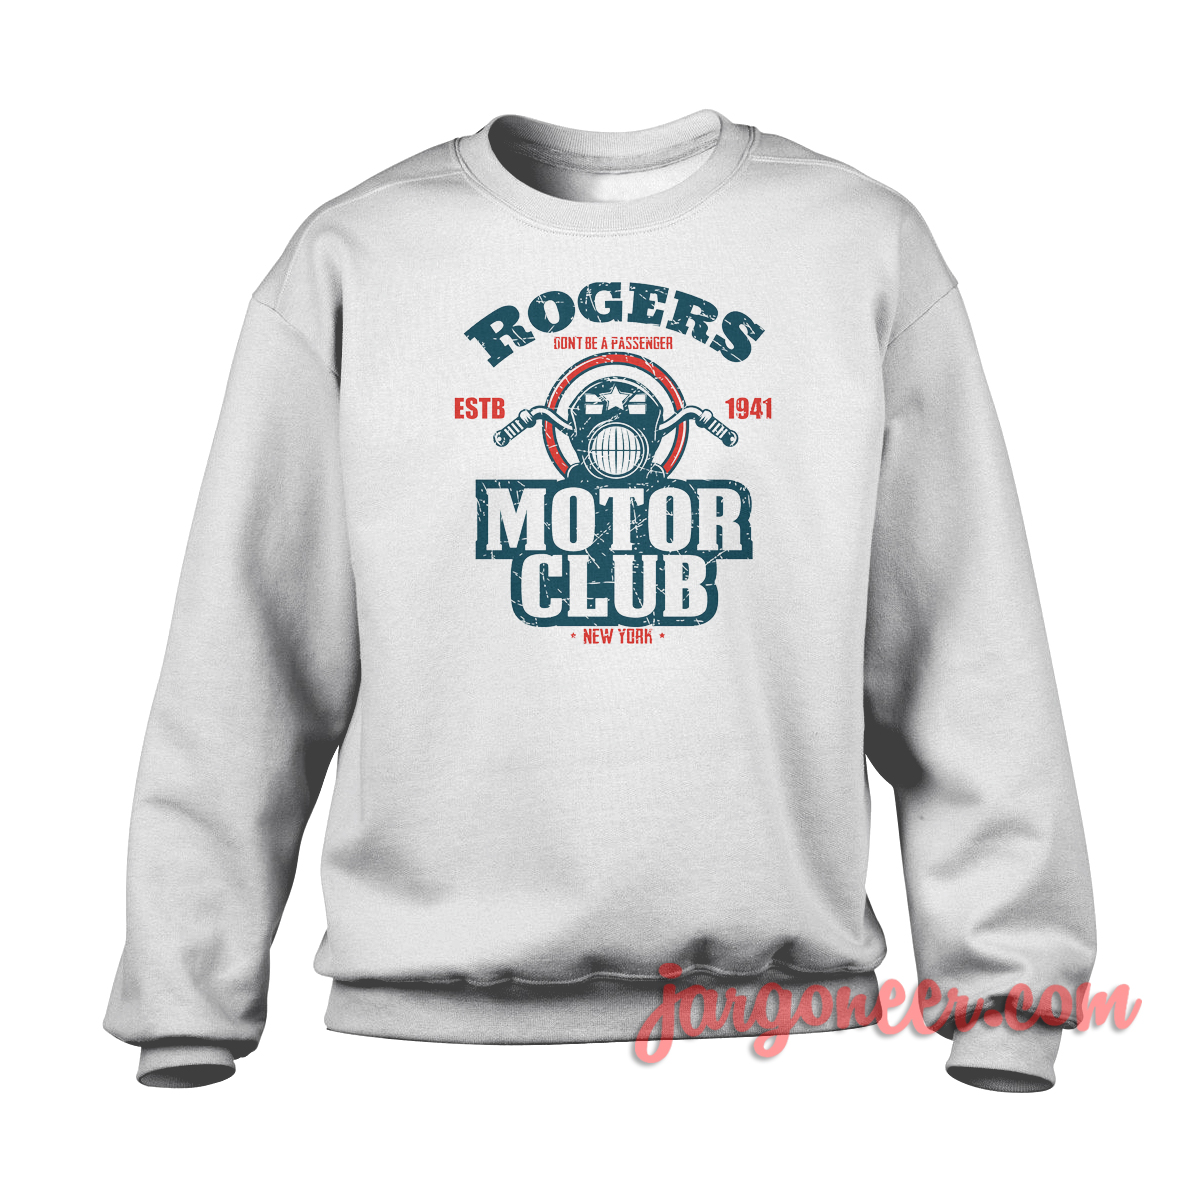 Rogers Motor Club - Shop Unique Graphic Cool Shirt Designs